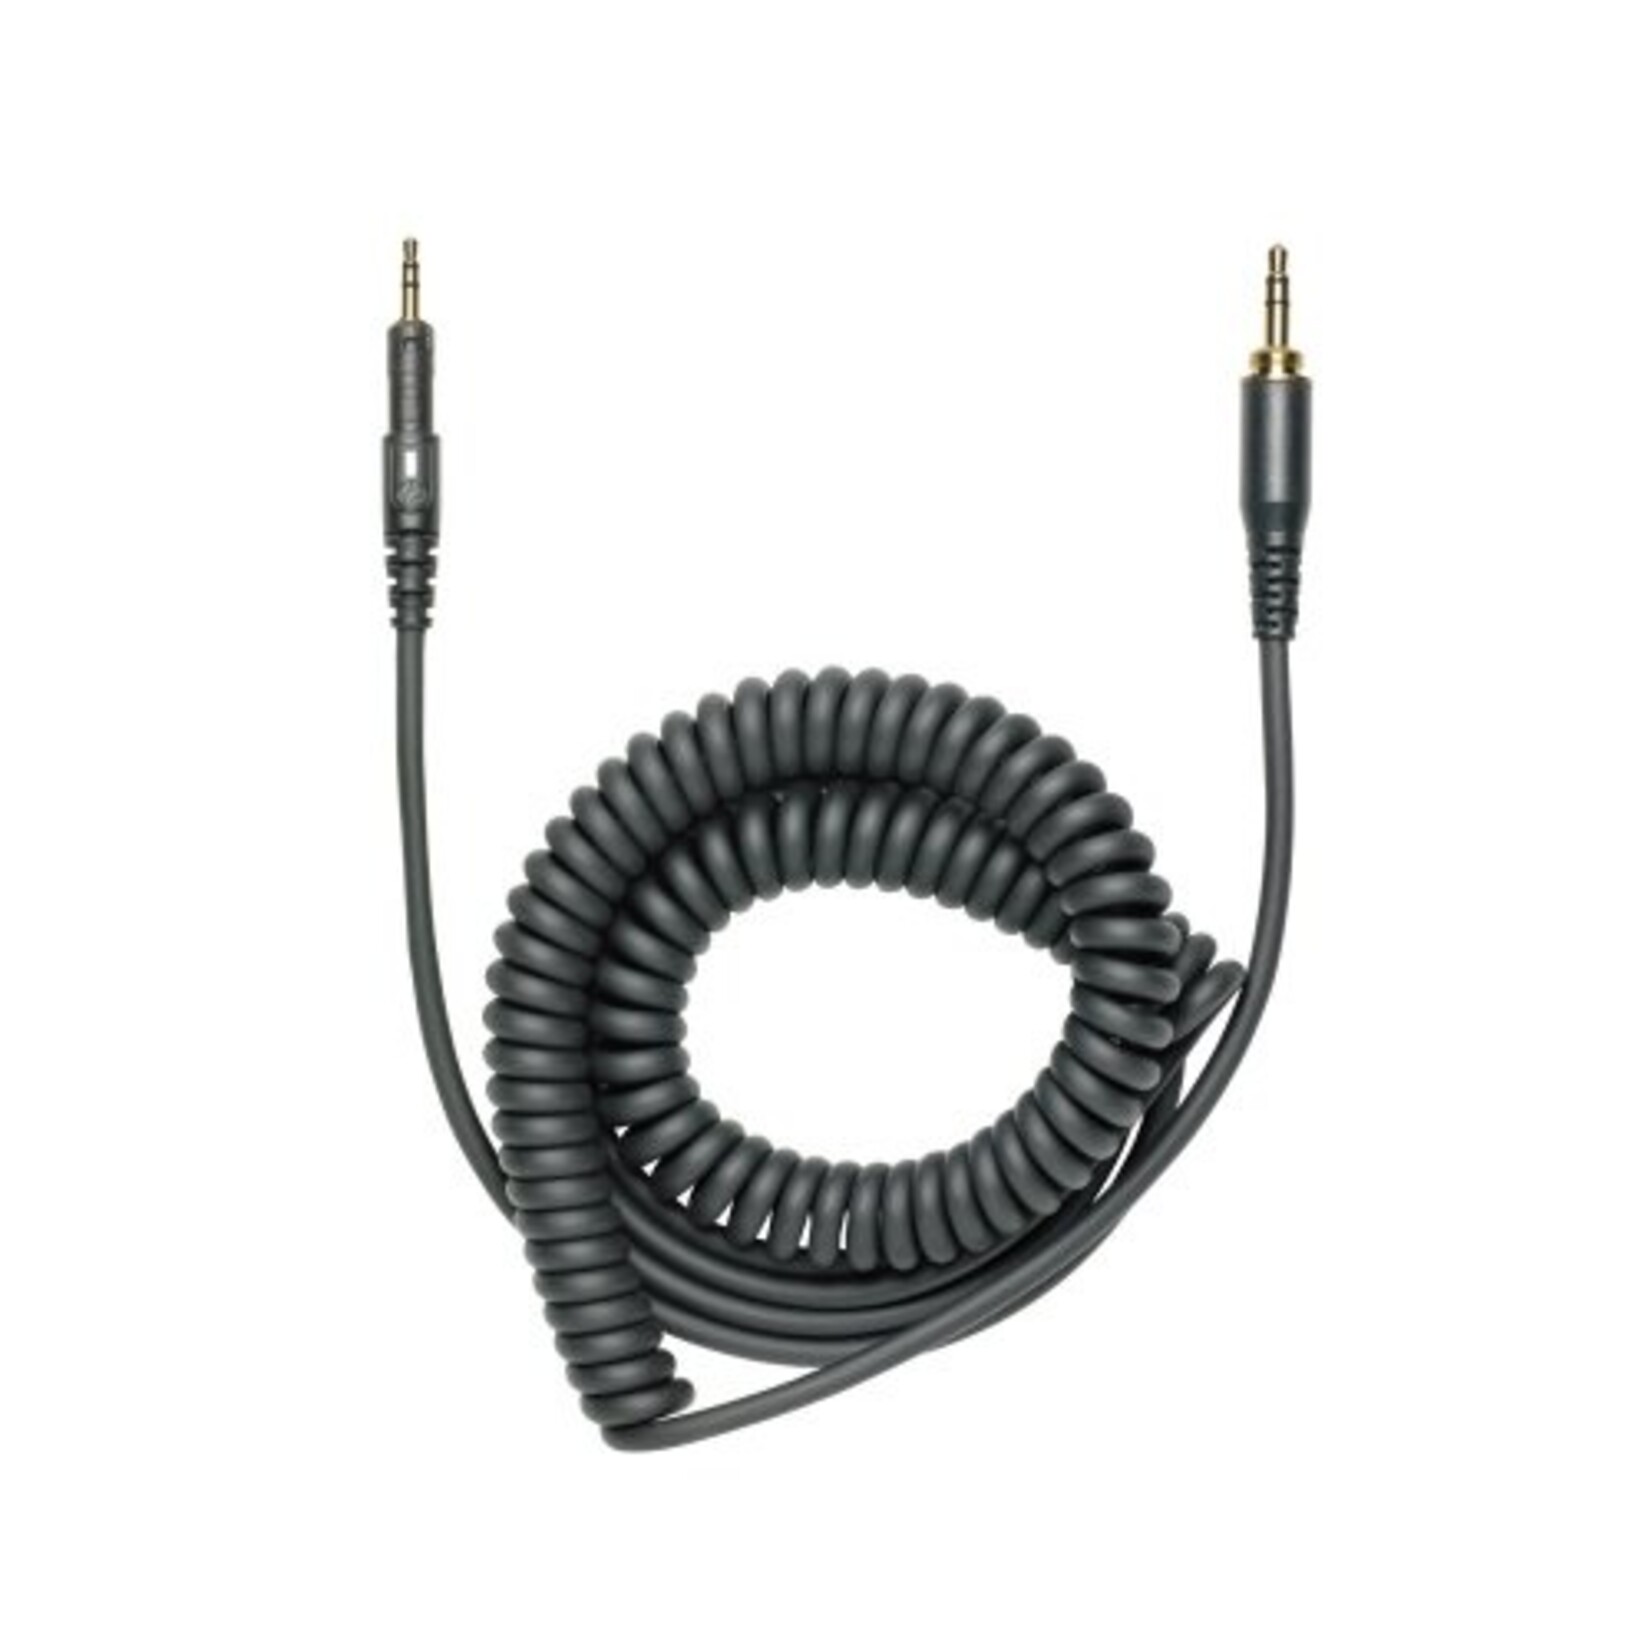 Audio-Technica ATH-M50xBK Professional Monitor Headphones - Black